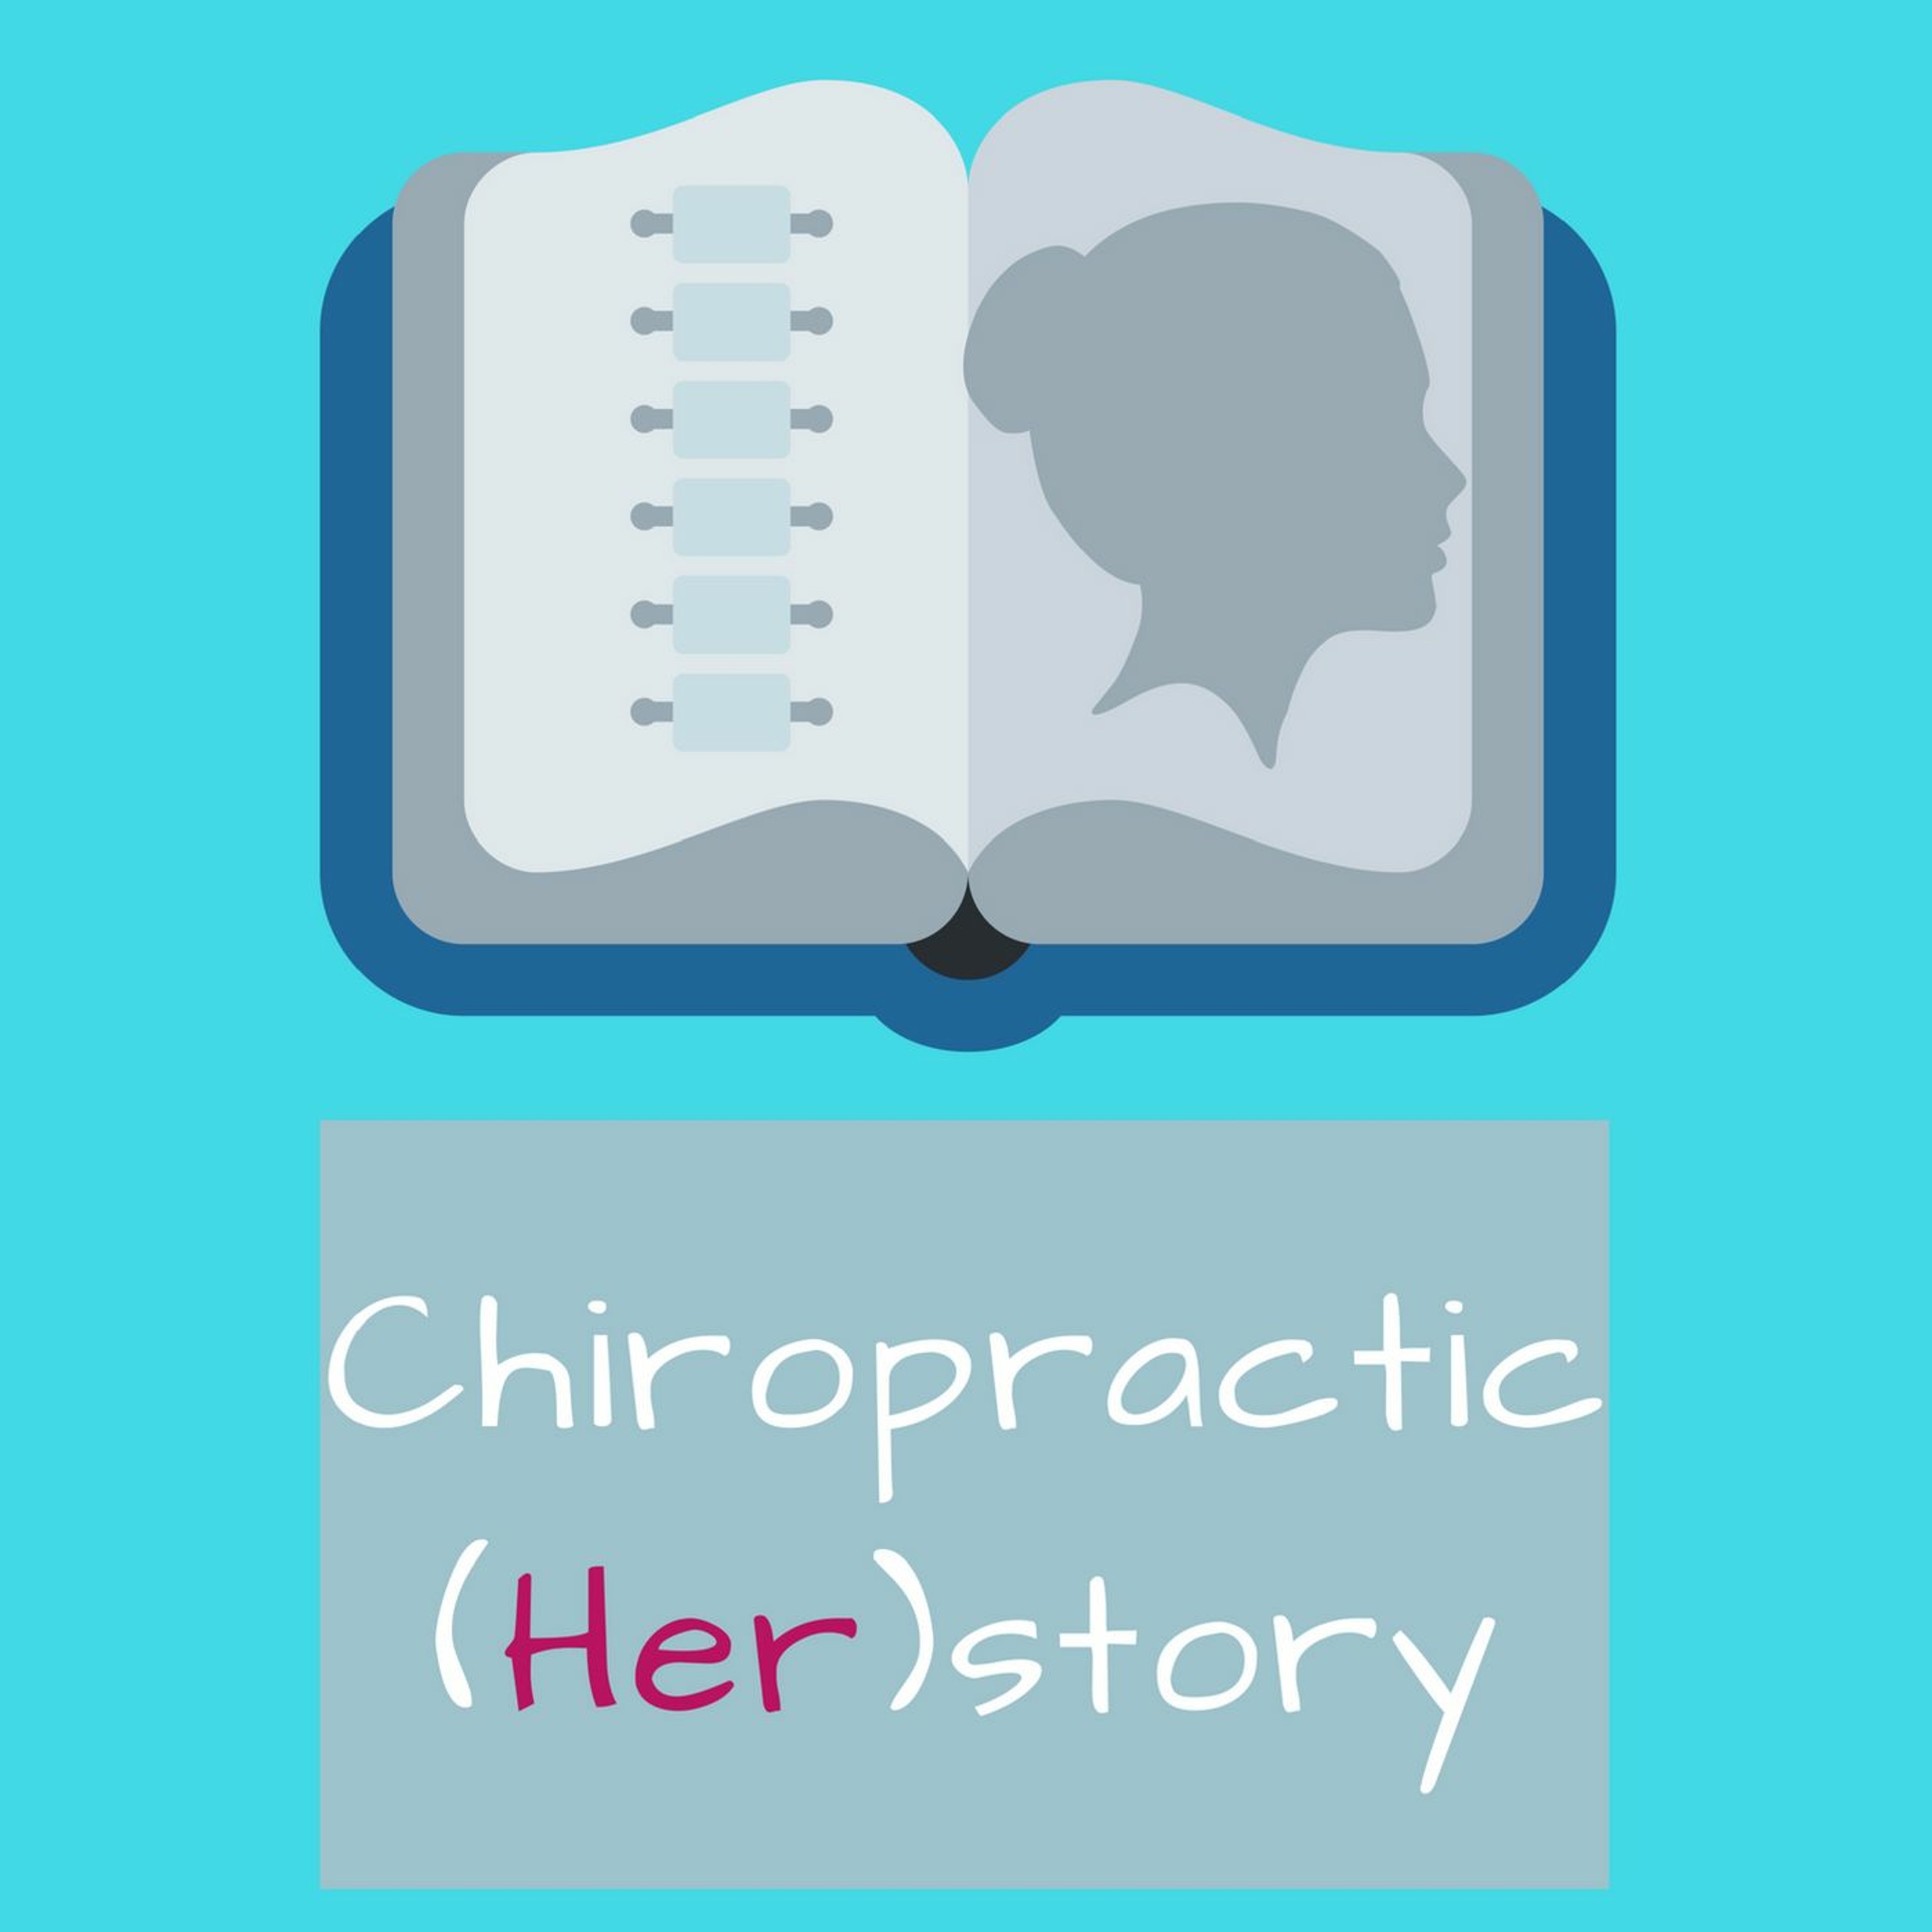 Dr. Devin Vrana- Chiropractic (Her)story Episode 55